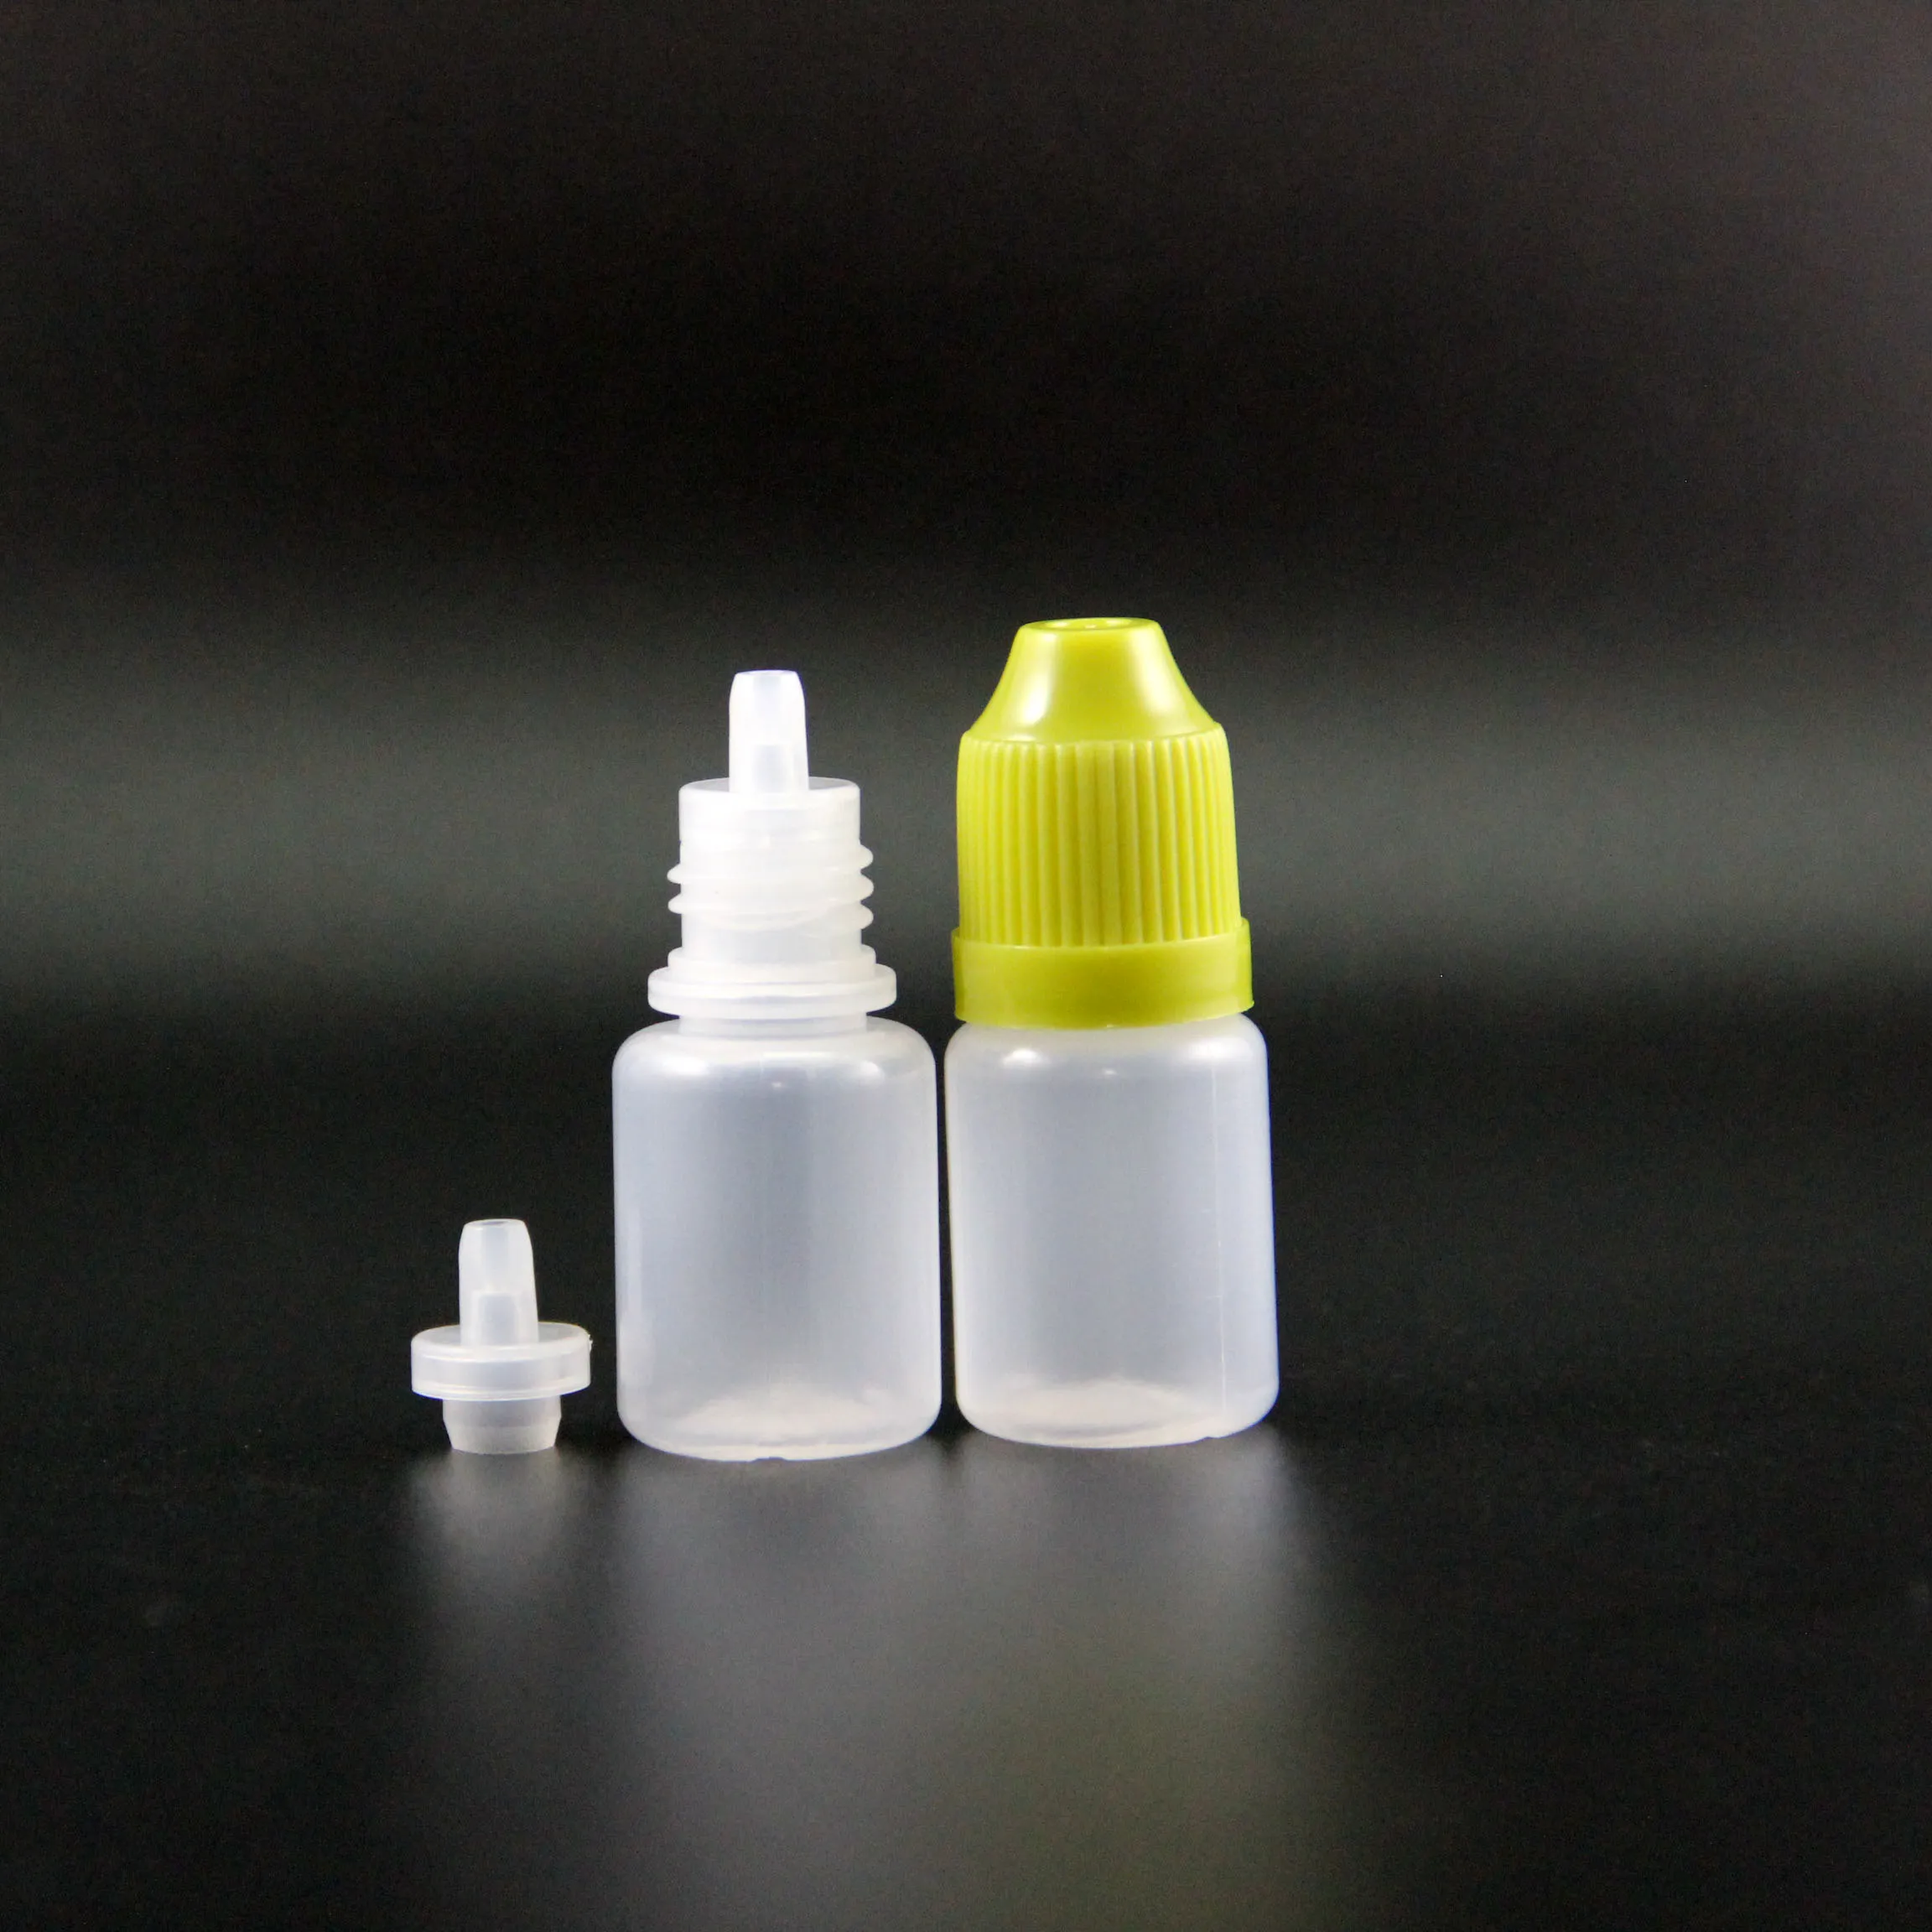 100 PCS 5 مل زجاجات قطارة بلاستيكية LDPE مع أغطية آمنة للطفل ونصائح زجاجة قابلة للضغط مع حلمة قصيرة